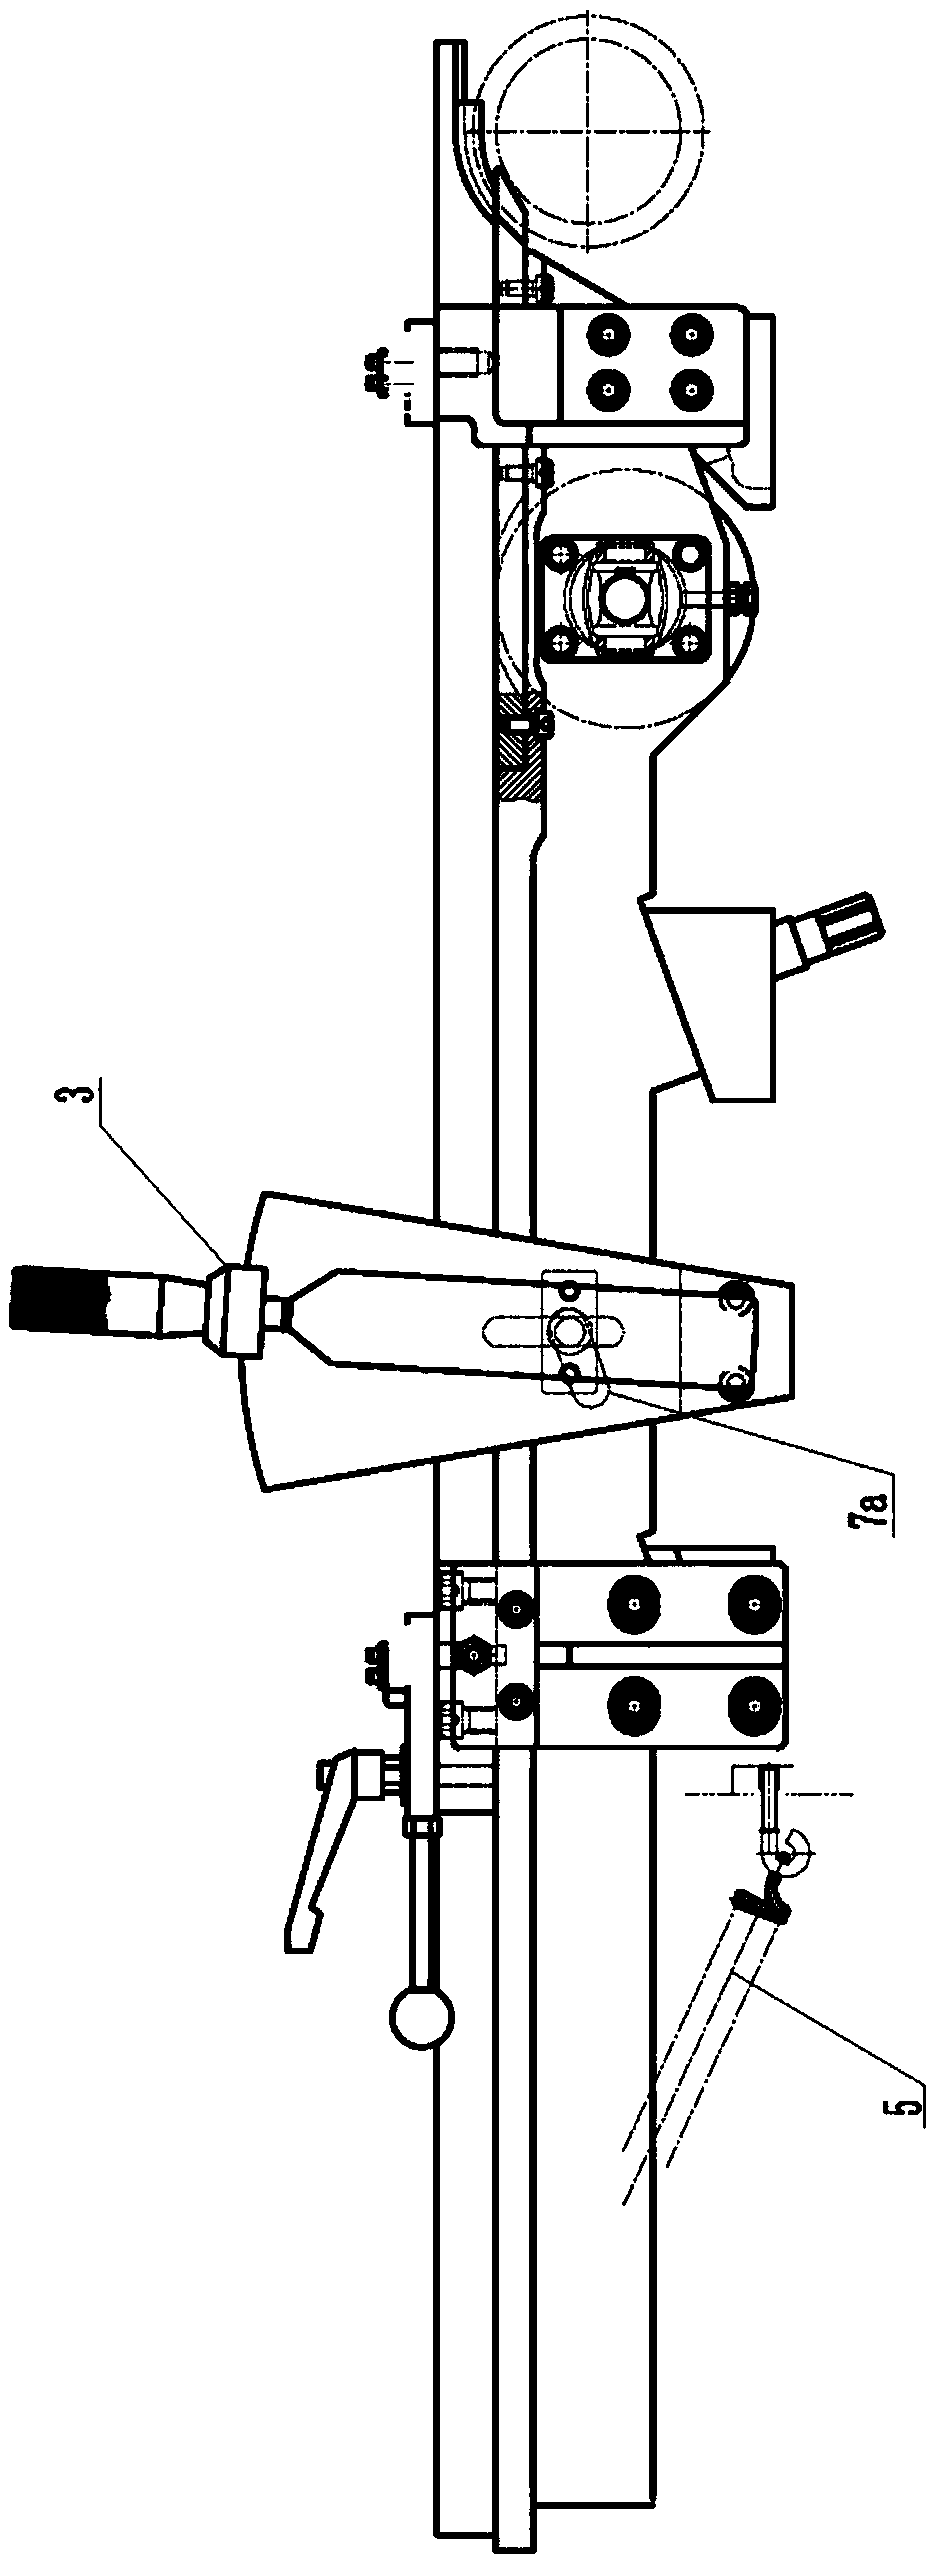 Adjusting and locking mechanism of woodworking machine tool workbench